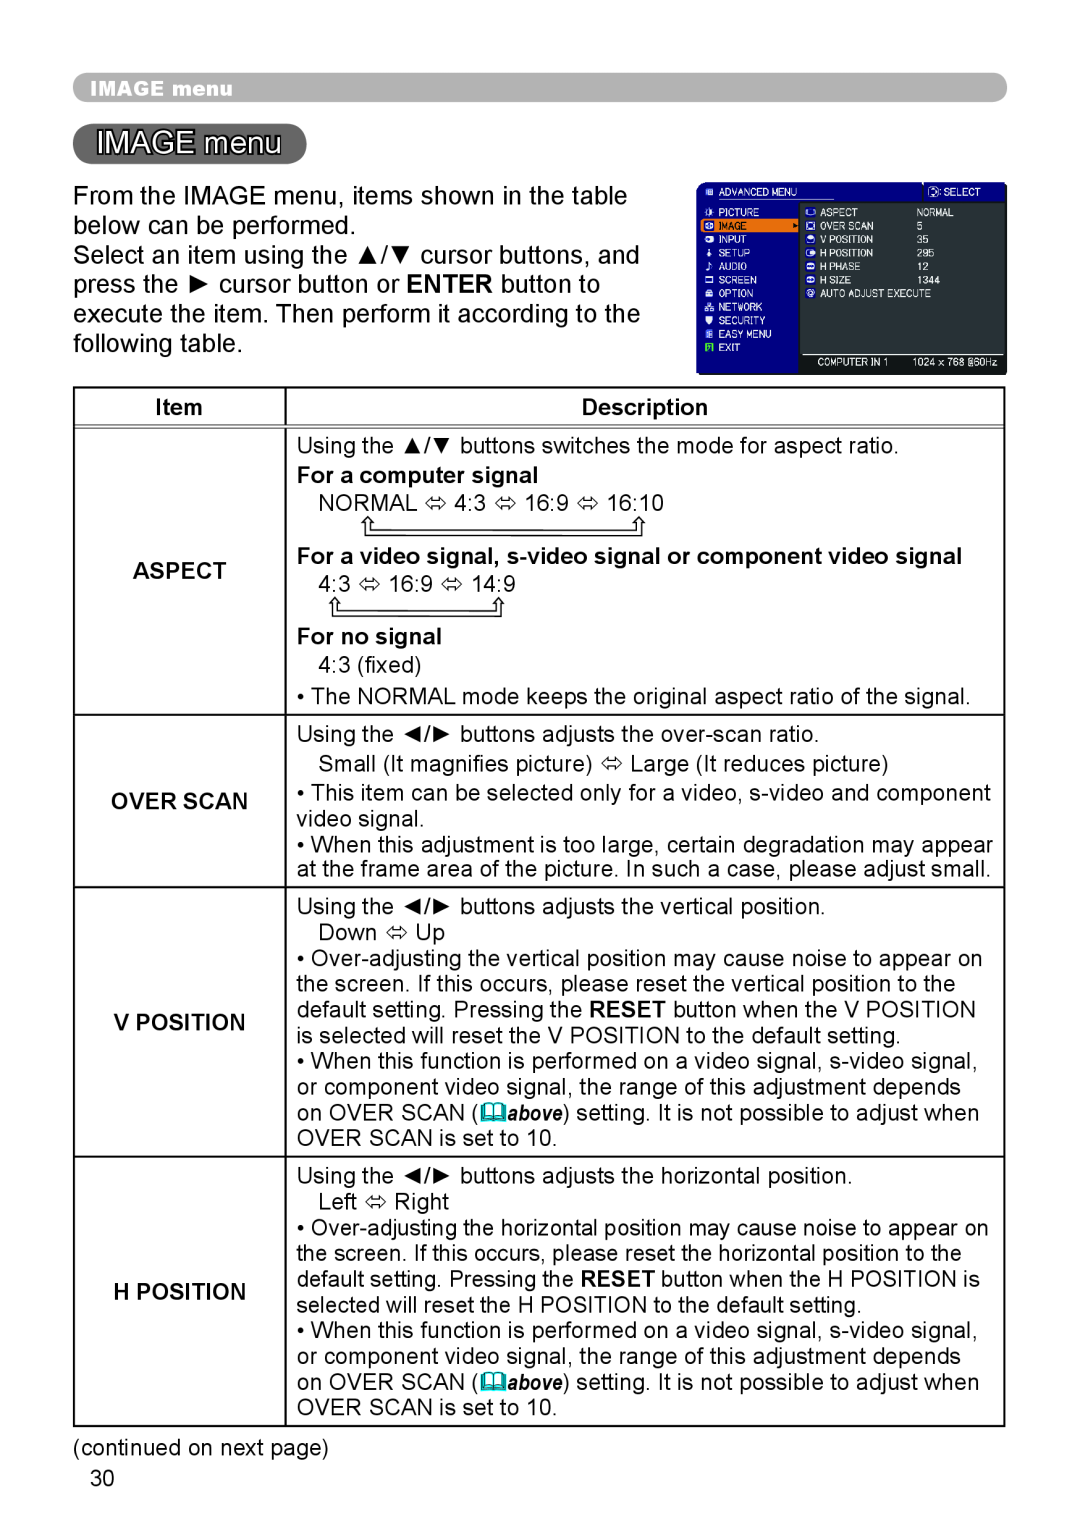 Dukane 8920H-RJ IMAGE menu, Description, For a computer signal, Aspect, For no signal, Over Scan, V Position, H Position 